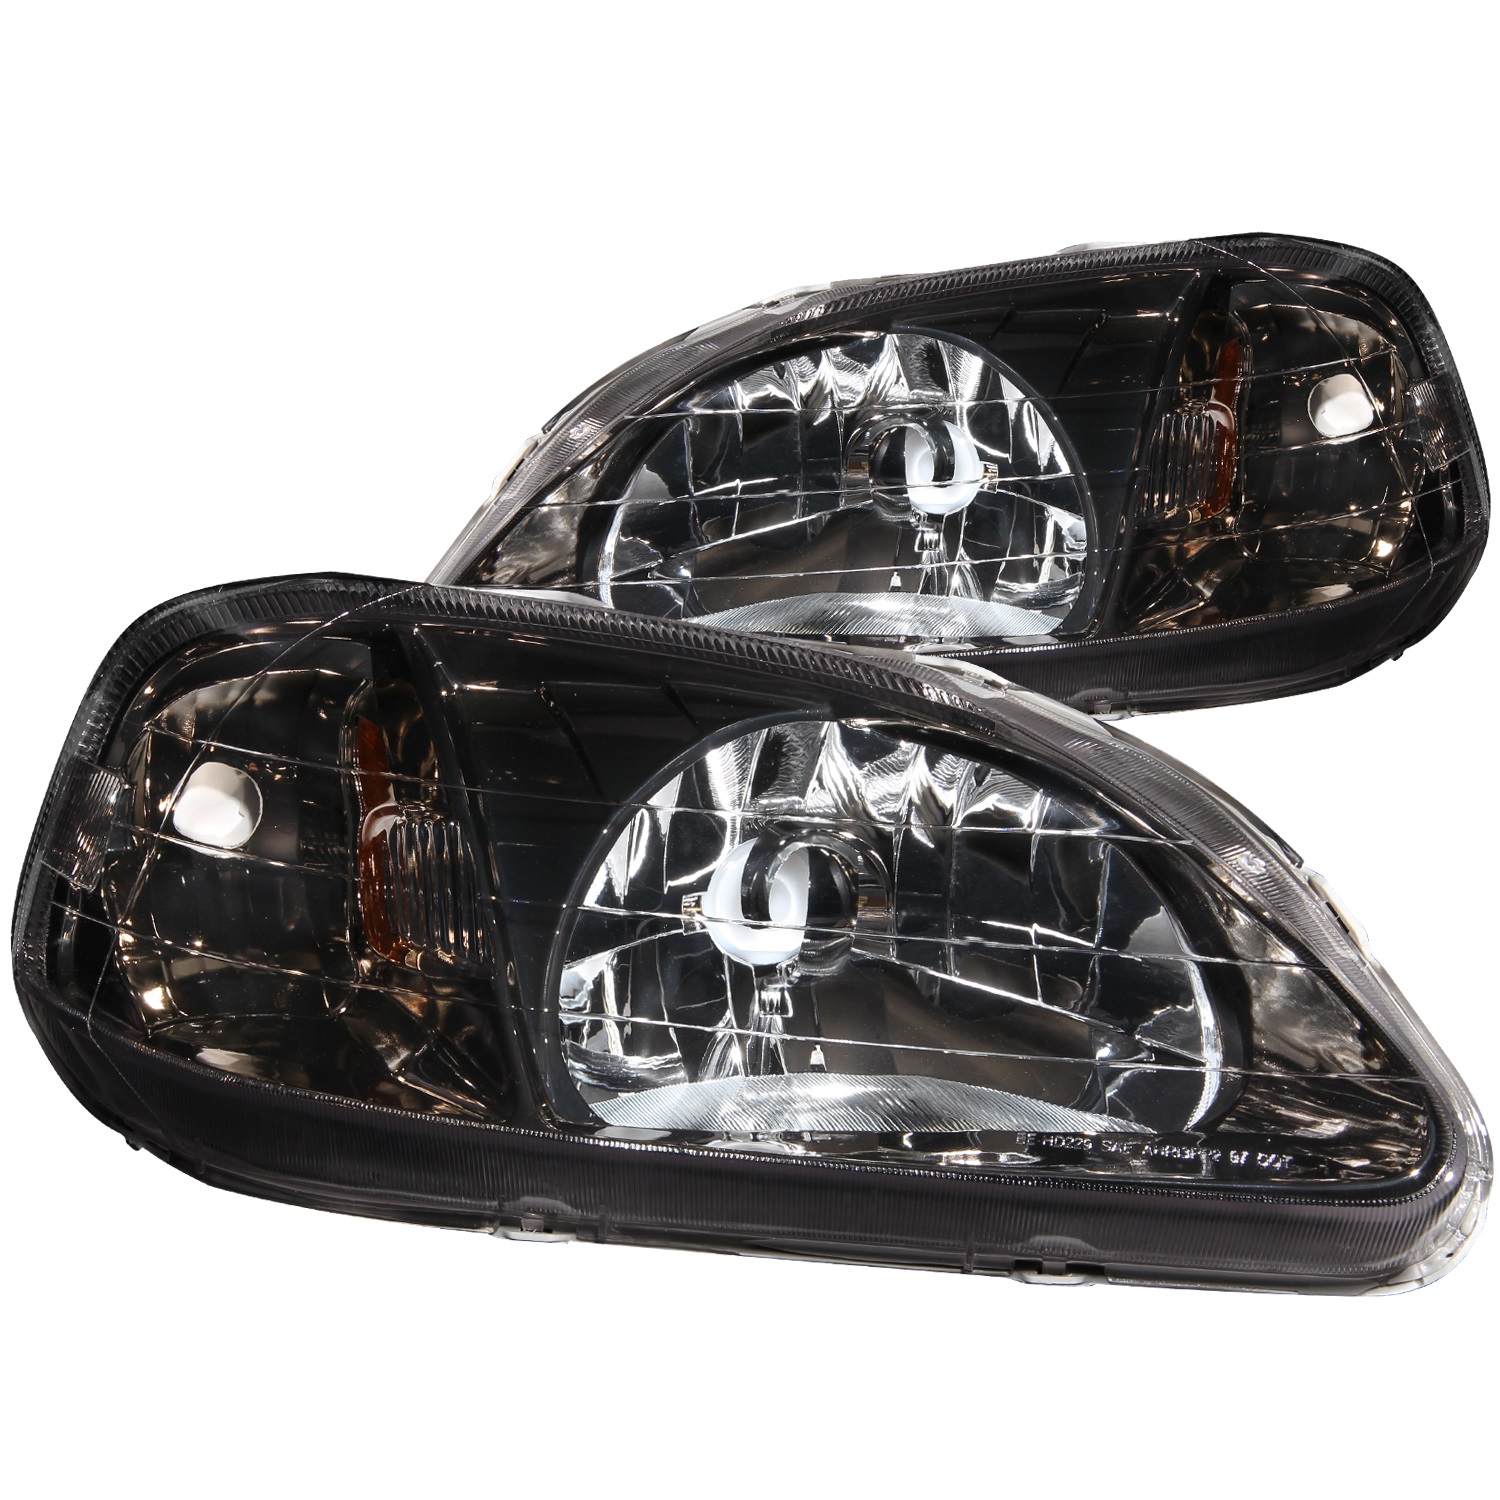 Anzo USA 121234 Crystal Headlight Set Fits 99-00 Civic